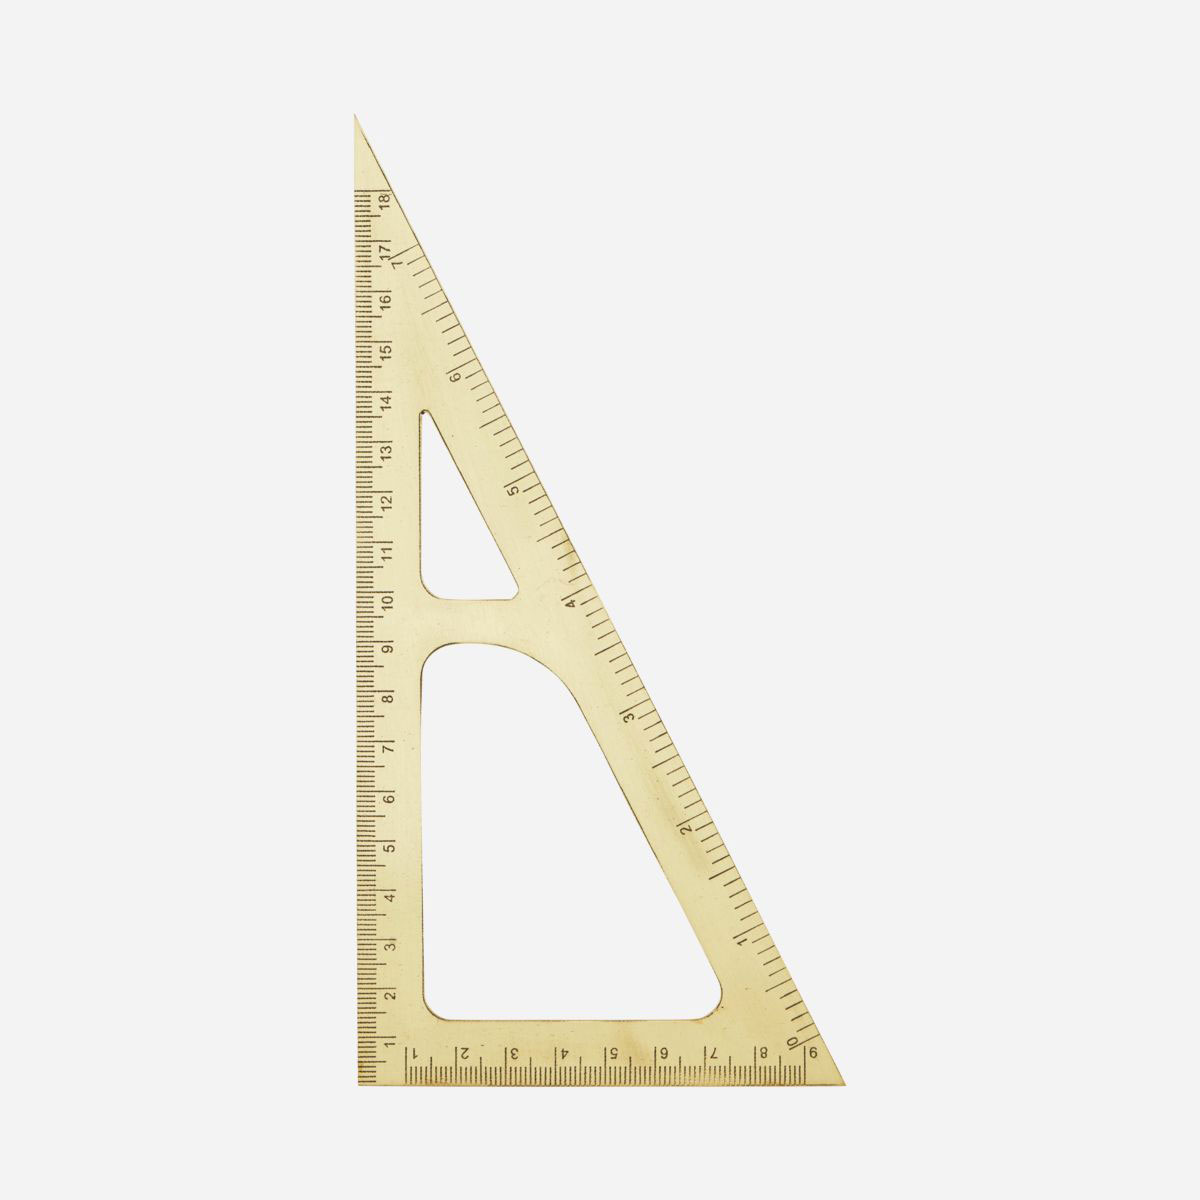 Dreikantlineal, Messing von Monograph, Dreieck